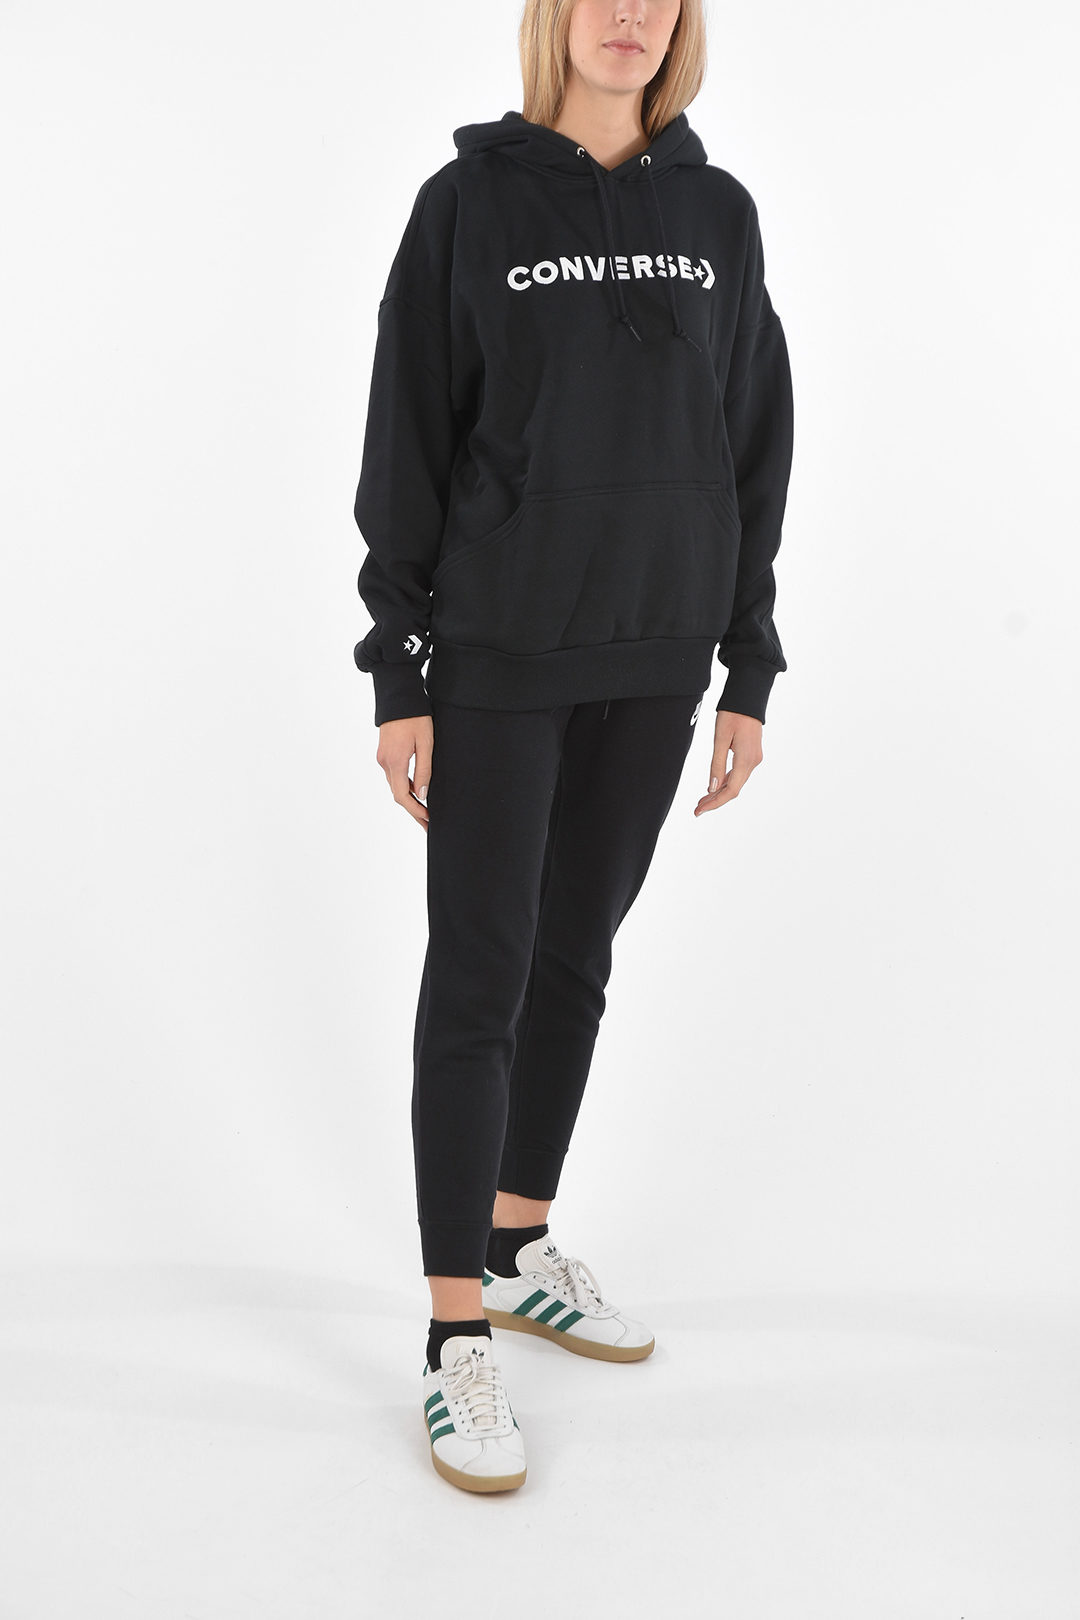 Converse Hoodie Emboroidered Sweatshirt - Glamood Outlet